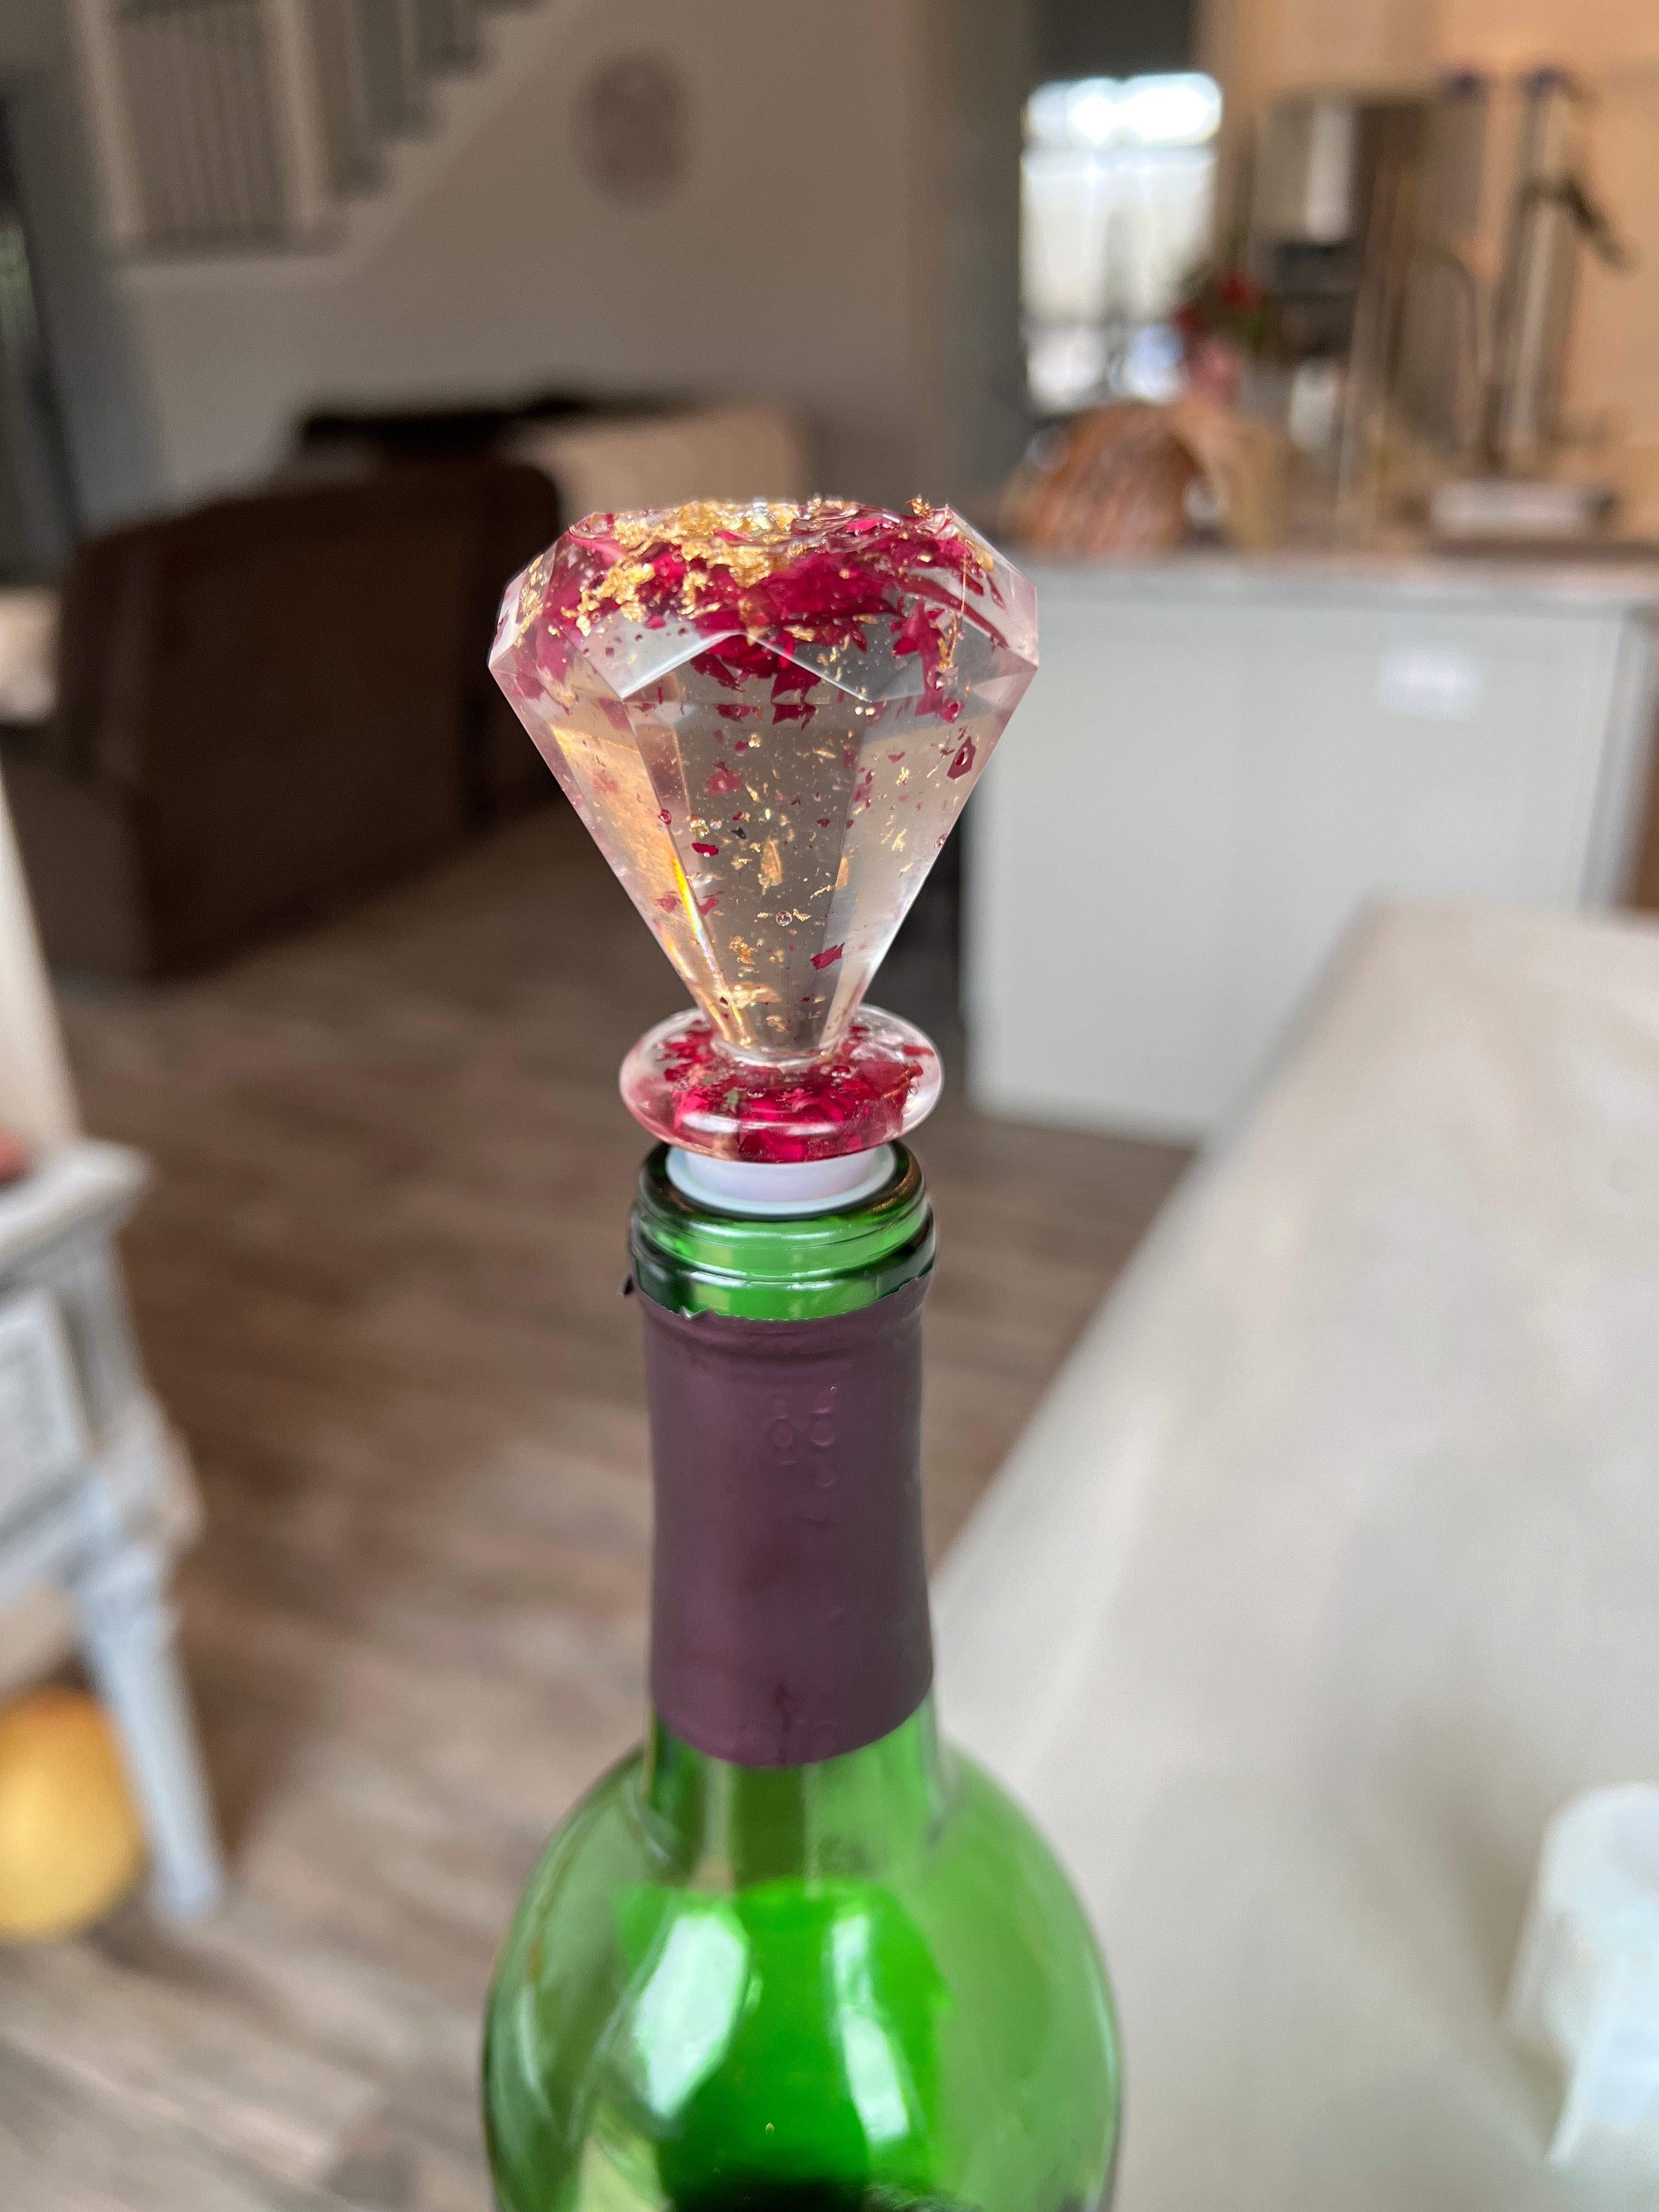 Diamond Edge Silicone Resin Mold Wine Bottle Stopper